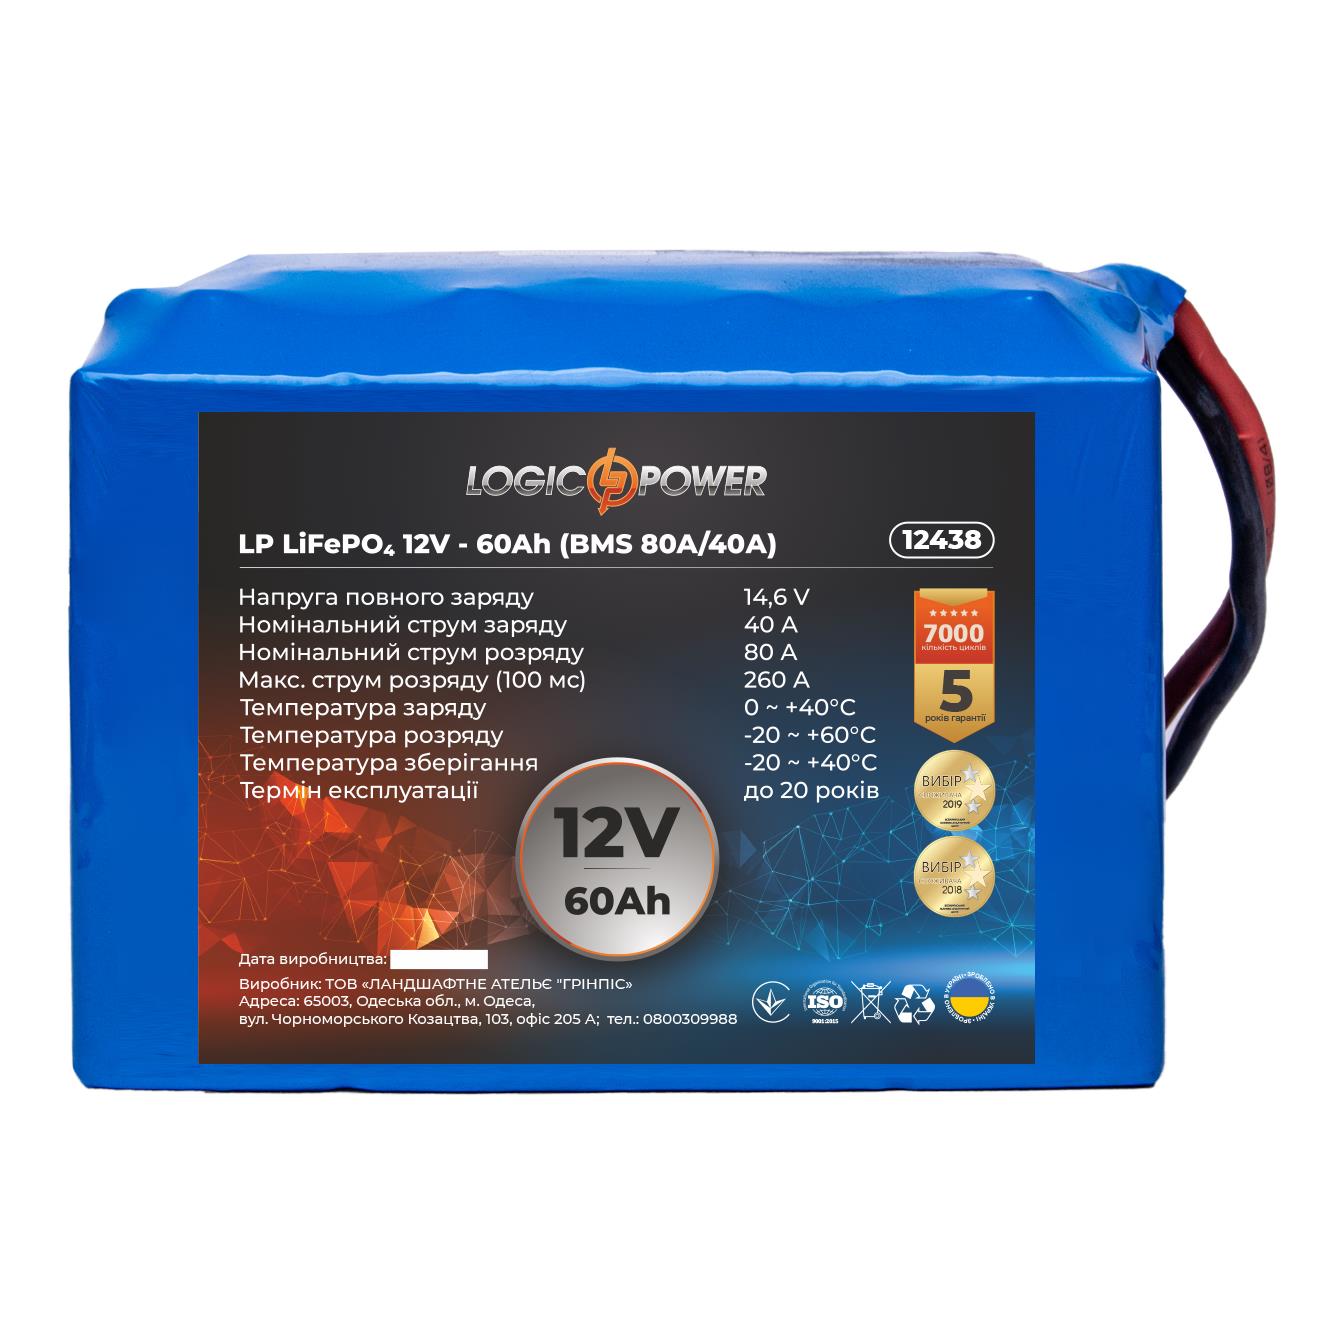 Акумулятор літій-залізо-фосфатний LogicPower LP LiFePO4 12V - 60 Ah (BMS 80A/40А) (12438)